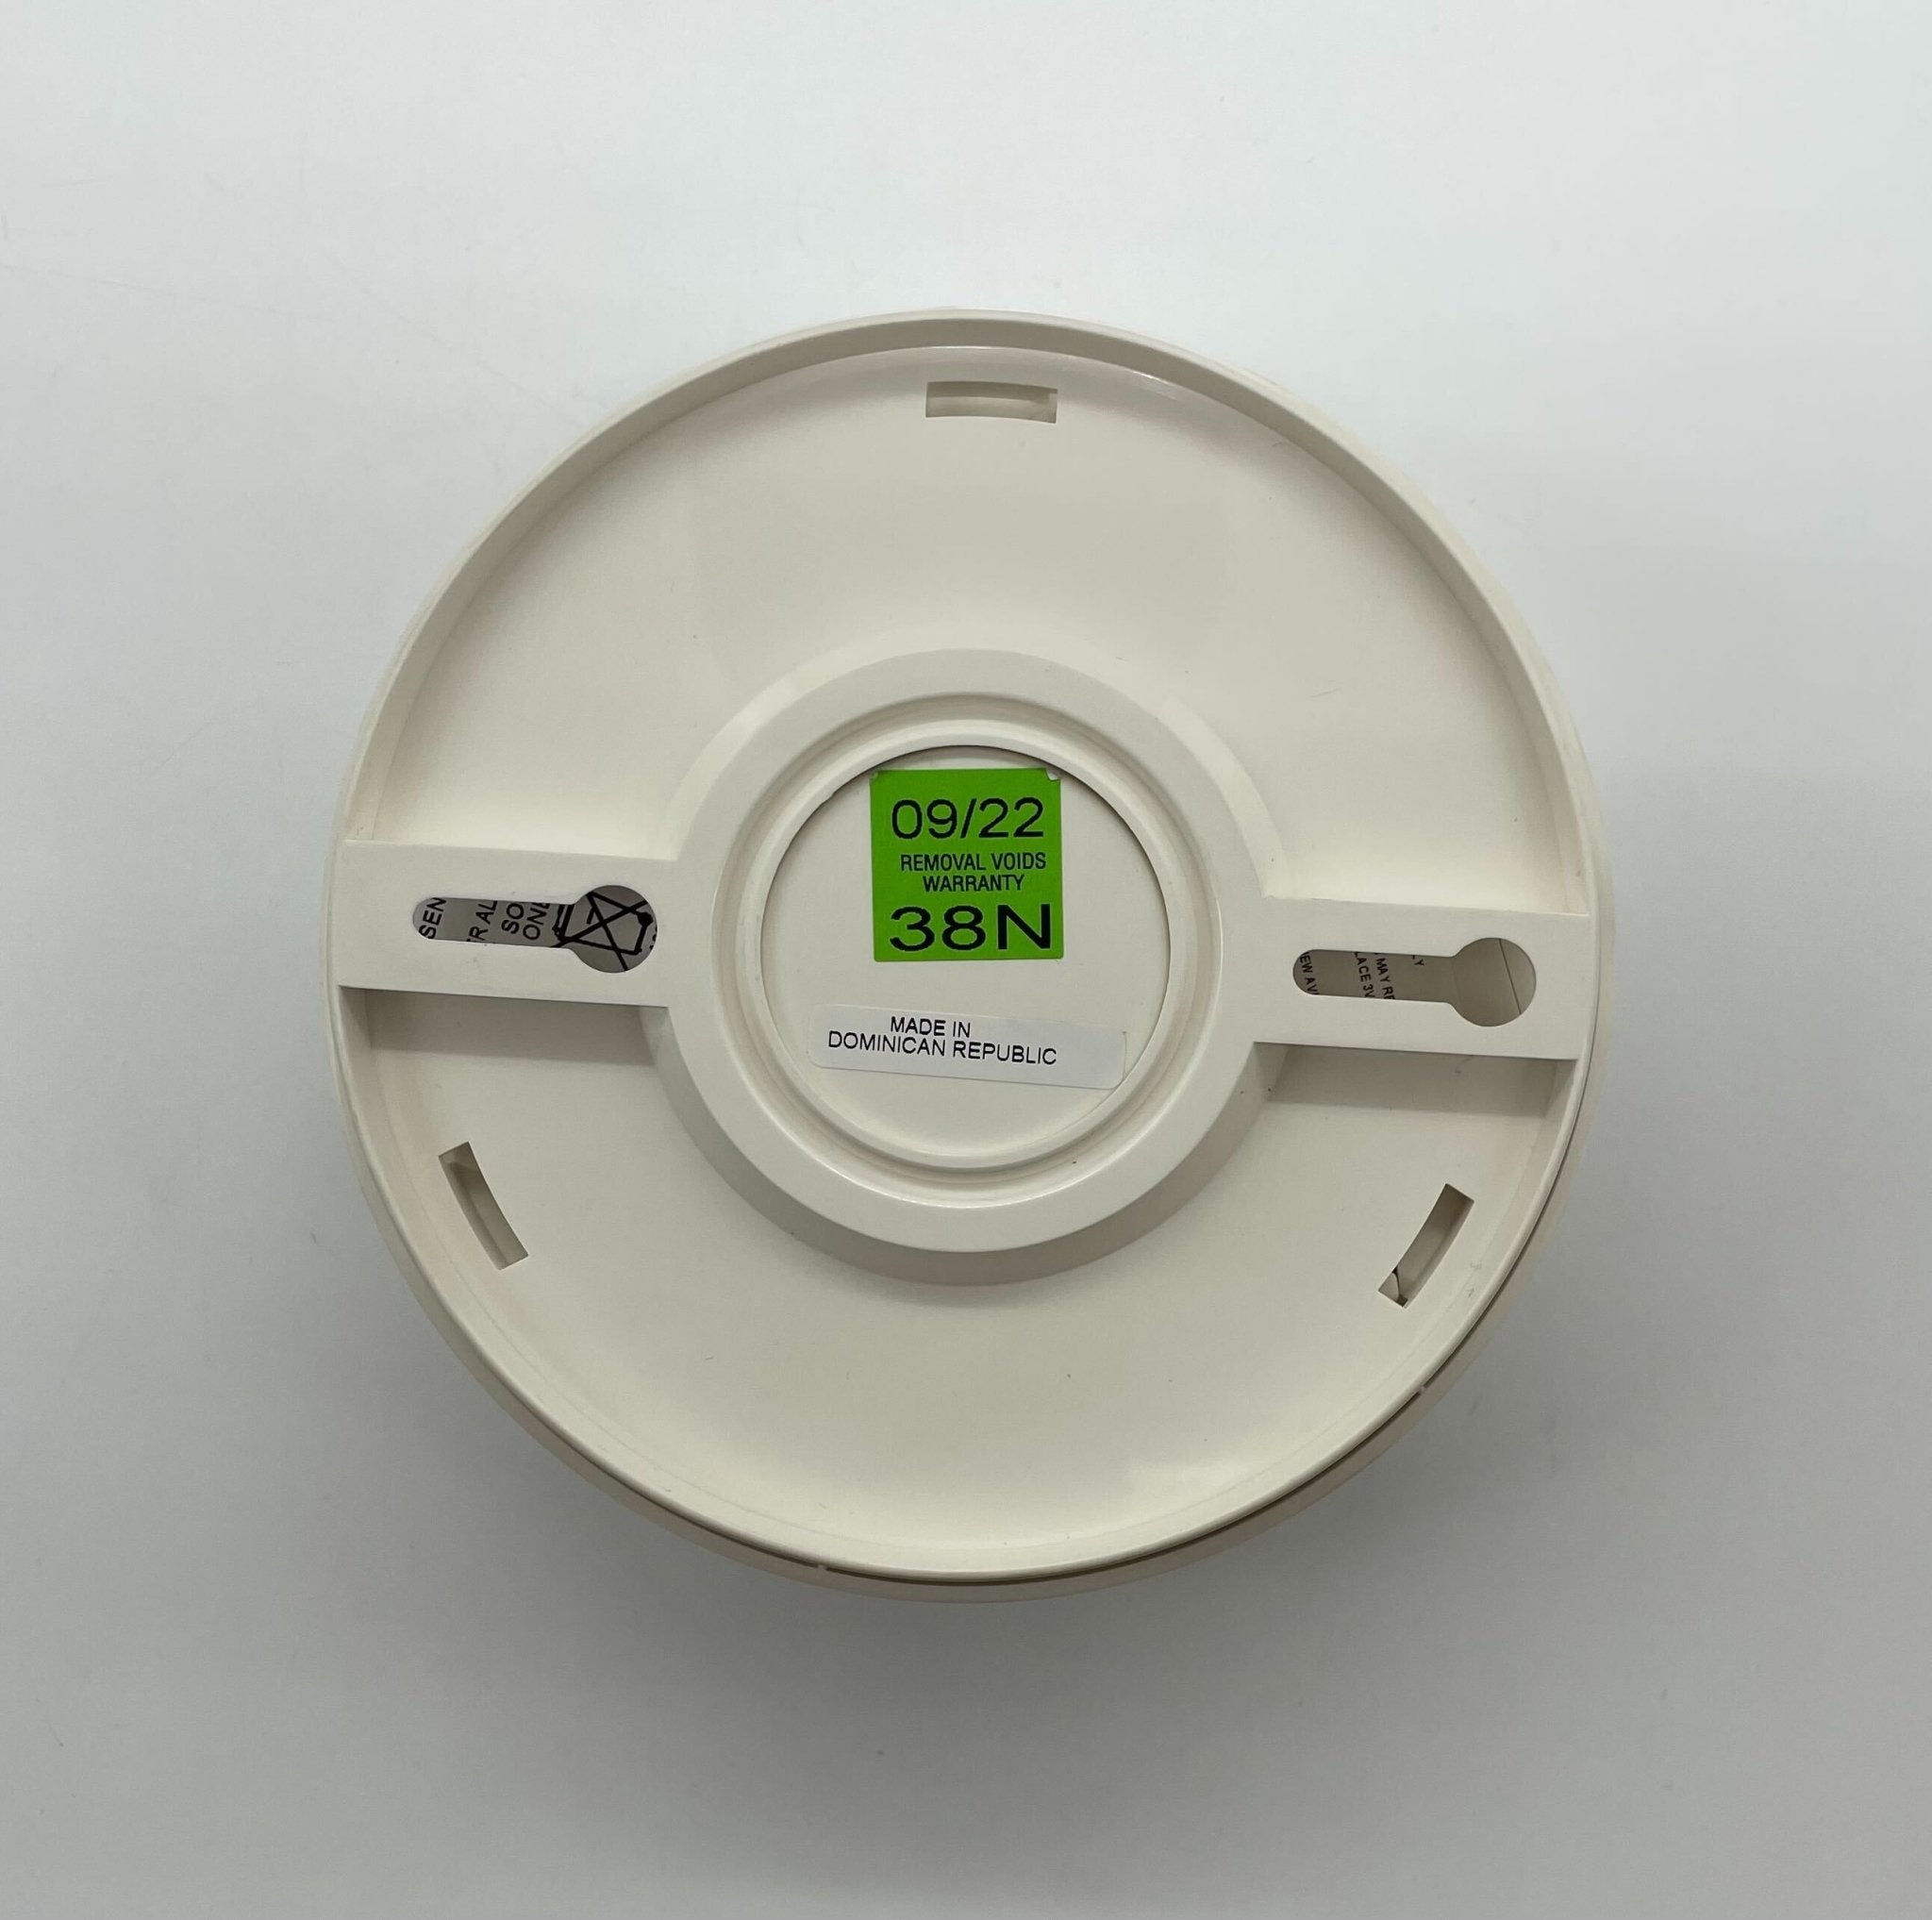 Napco GEM-SMK - The Fire Alarm Supplier